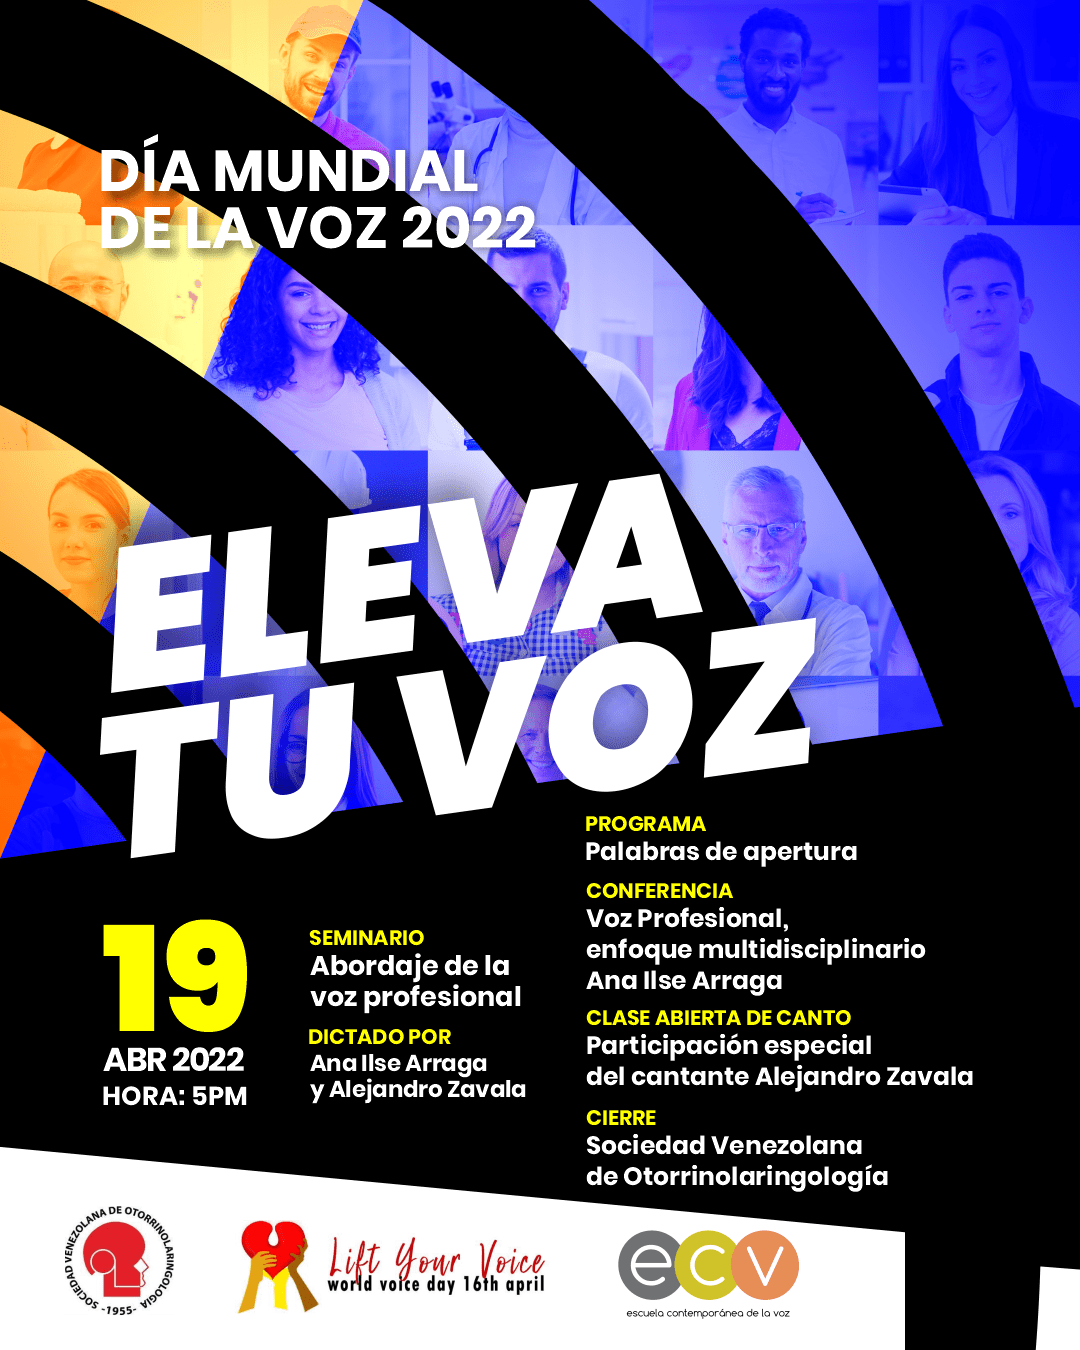 ECV - Evento - Dia Mundial de la Voz 2022 - 01